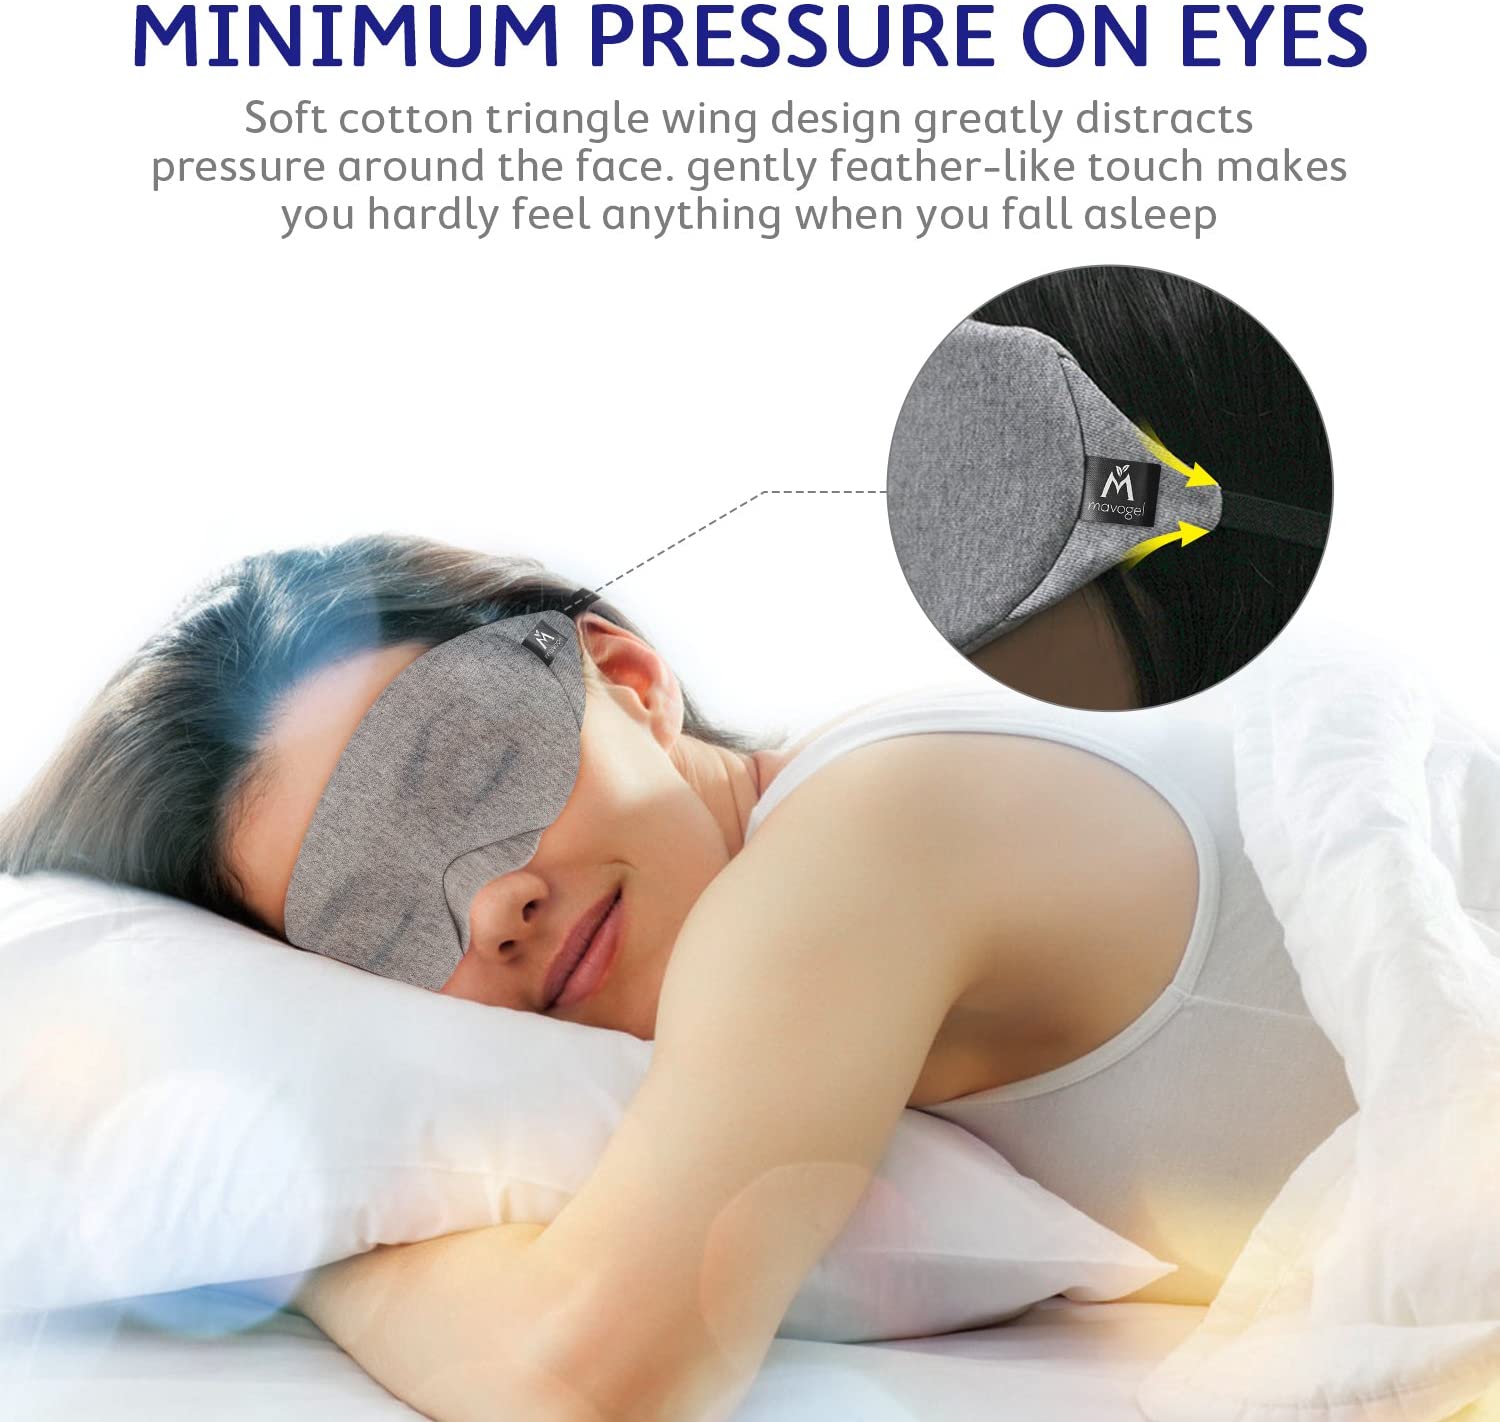 Mavogel Cotton Sleep Eye Mask, Soft and Comfortable  for Travel/Sleeping/Shift Work, Grey - image 4 of 6